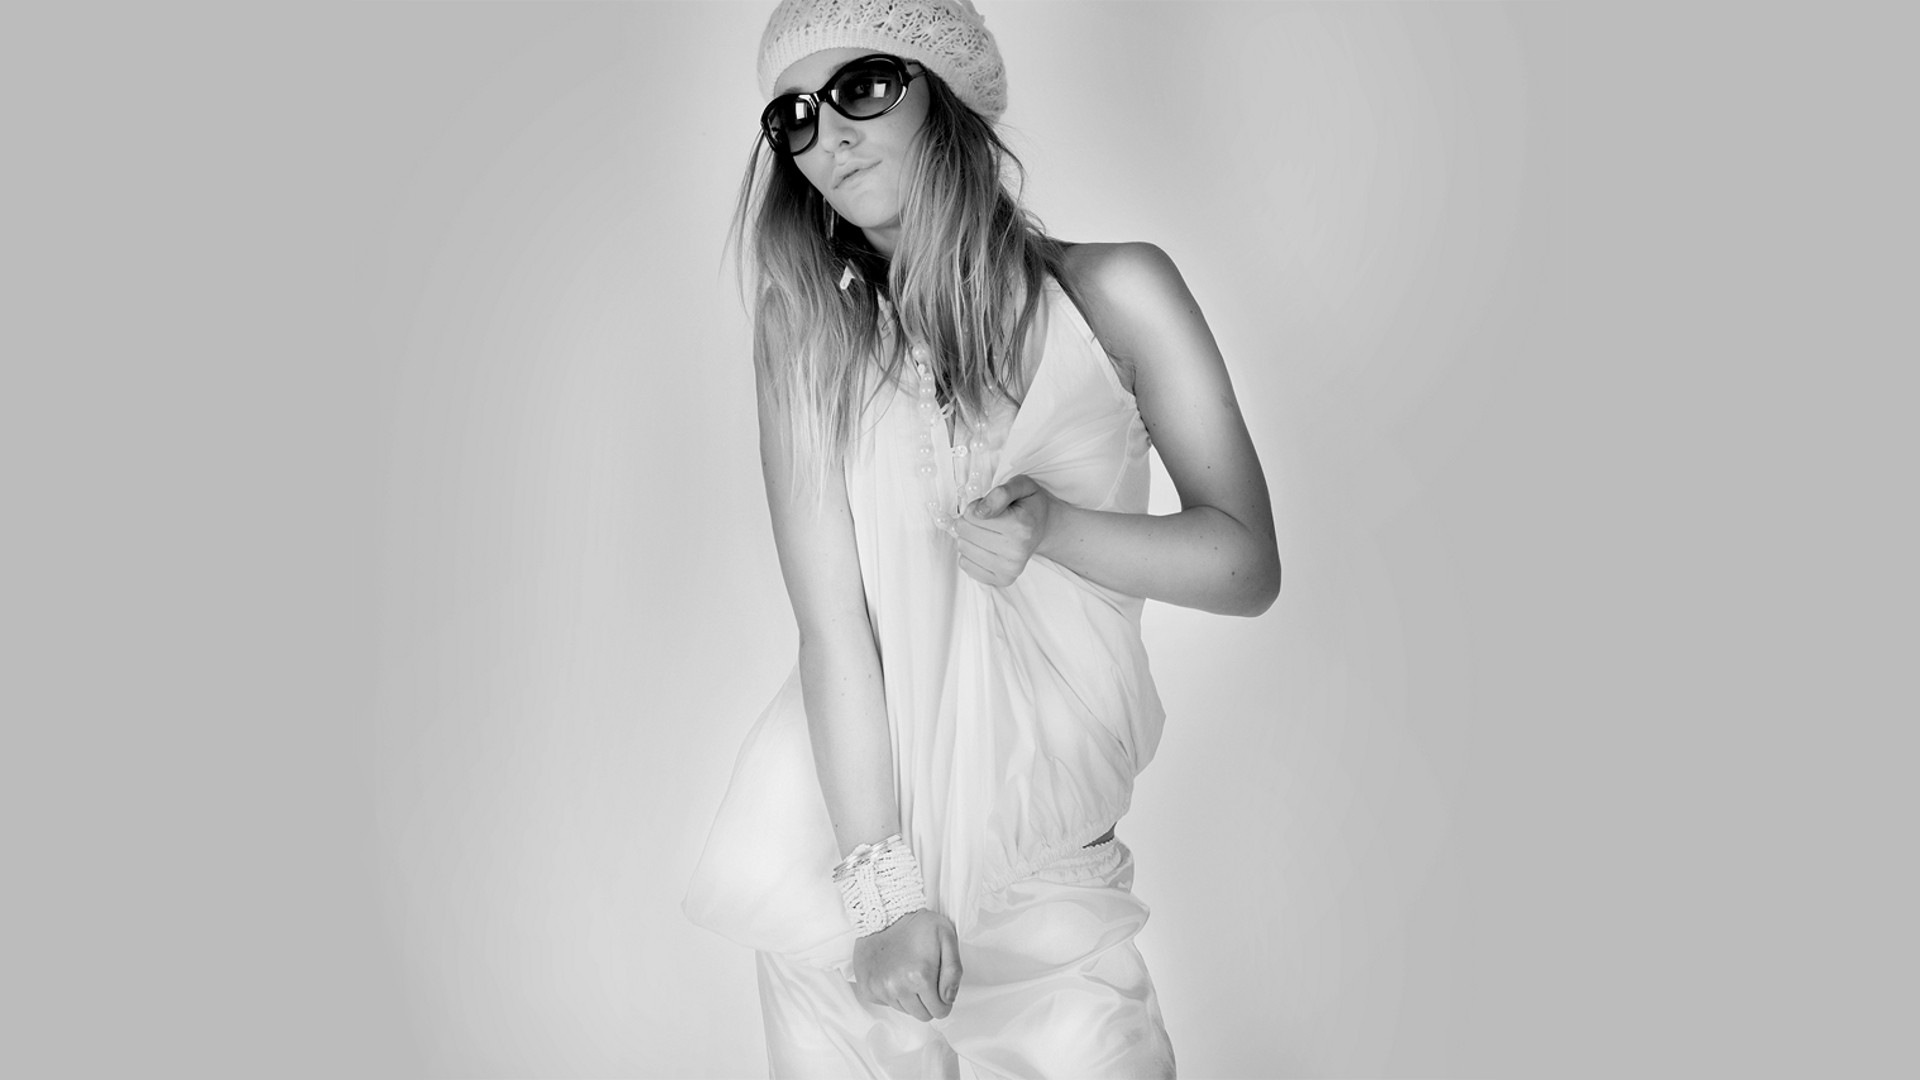 funky girl wallpaper,white,eyewear,photograph,shoulder,black and white